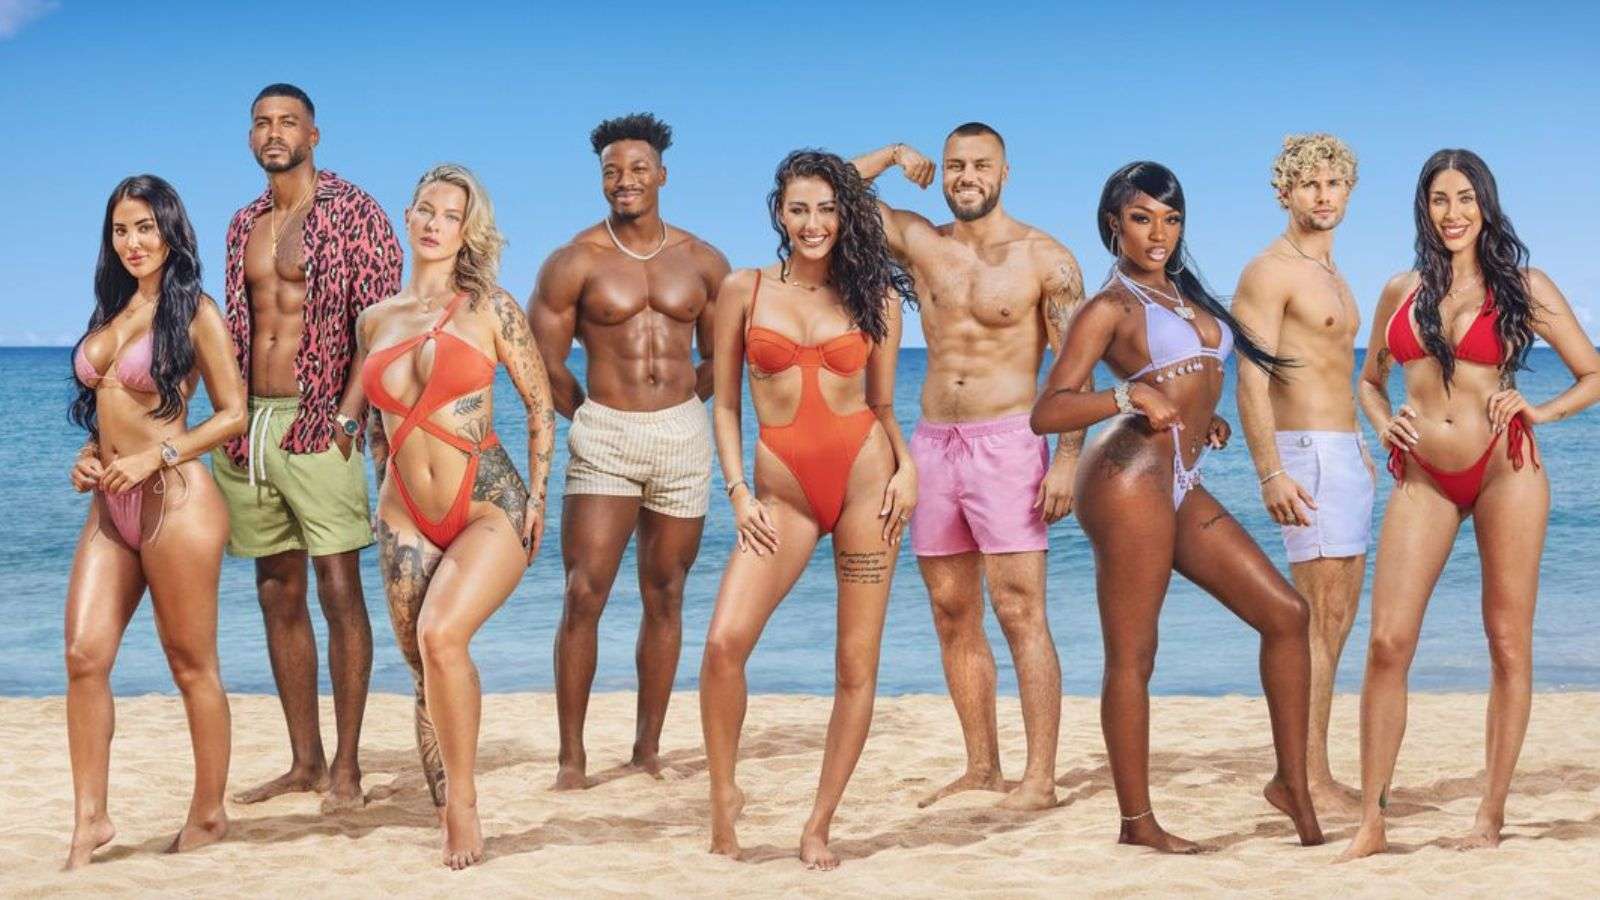 The Season 3 cast of Celebrity Ex on the Beach